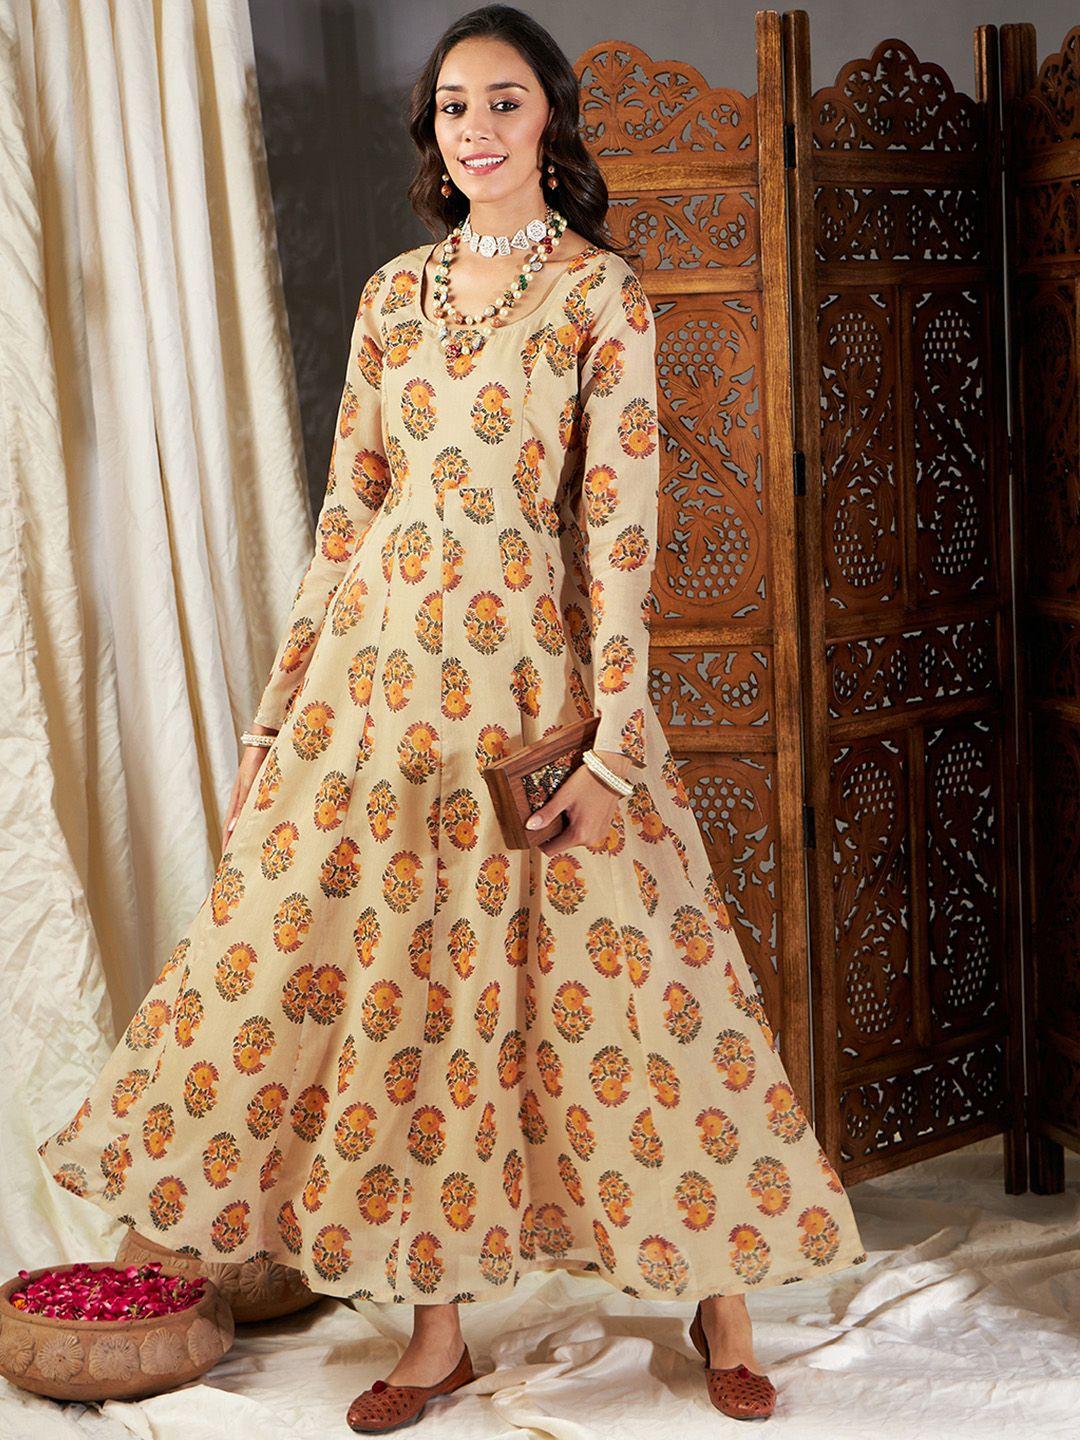 shae by sassafras beige & orange floral printed fit & flare maxi dress